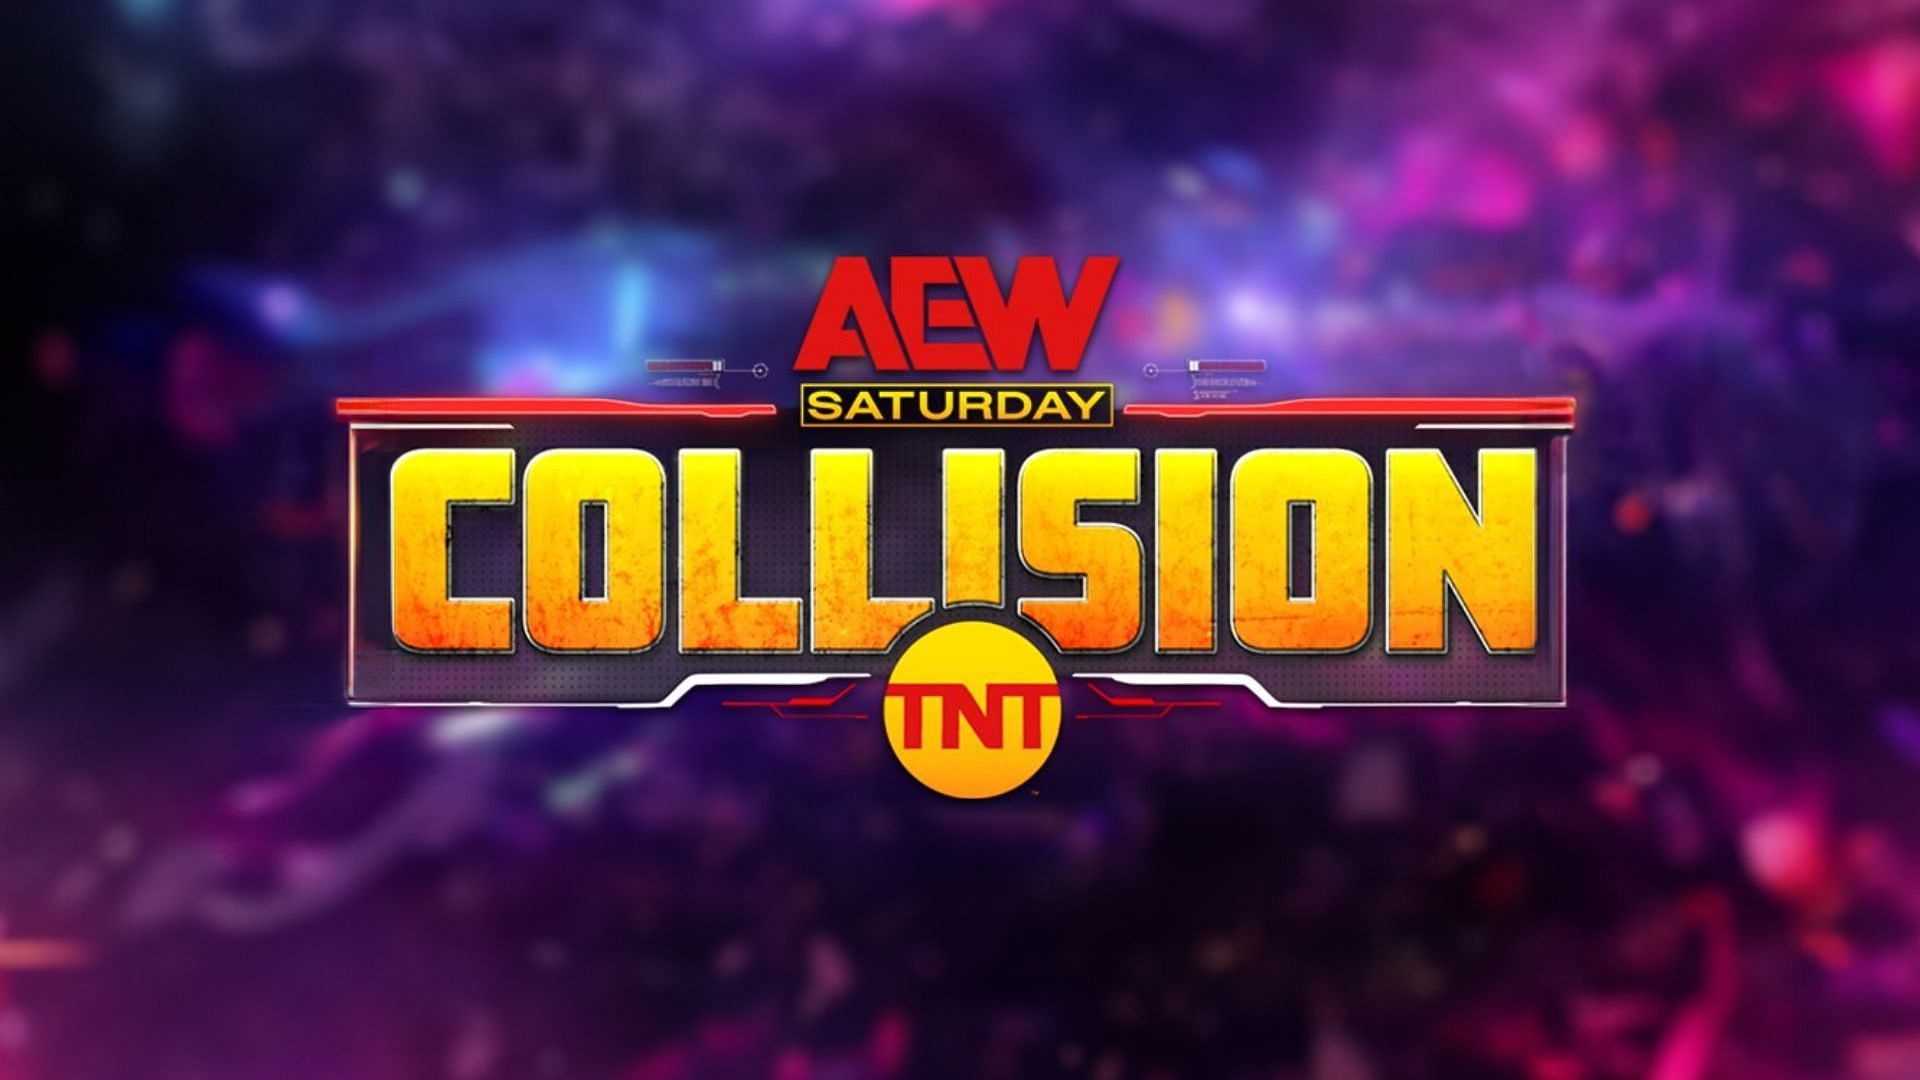 AEW Collision airs on Saturday nights